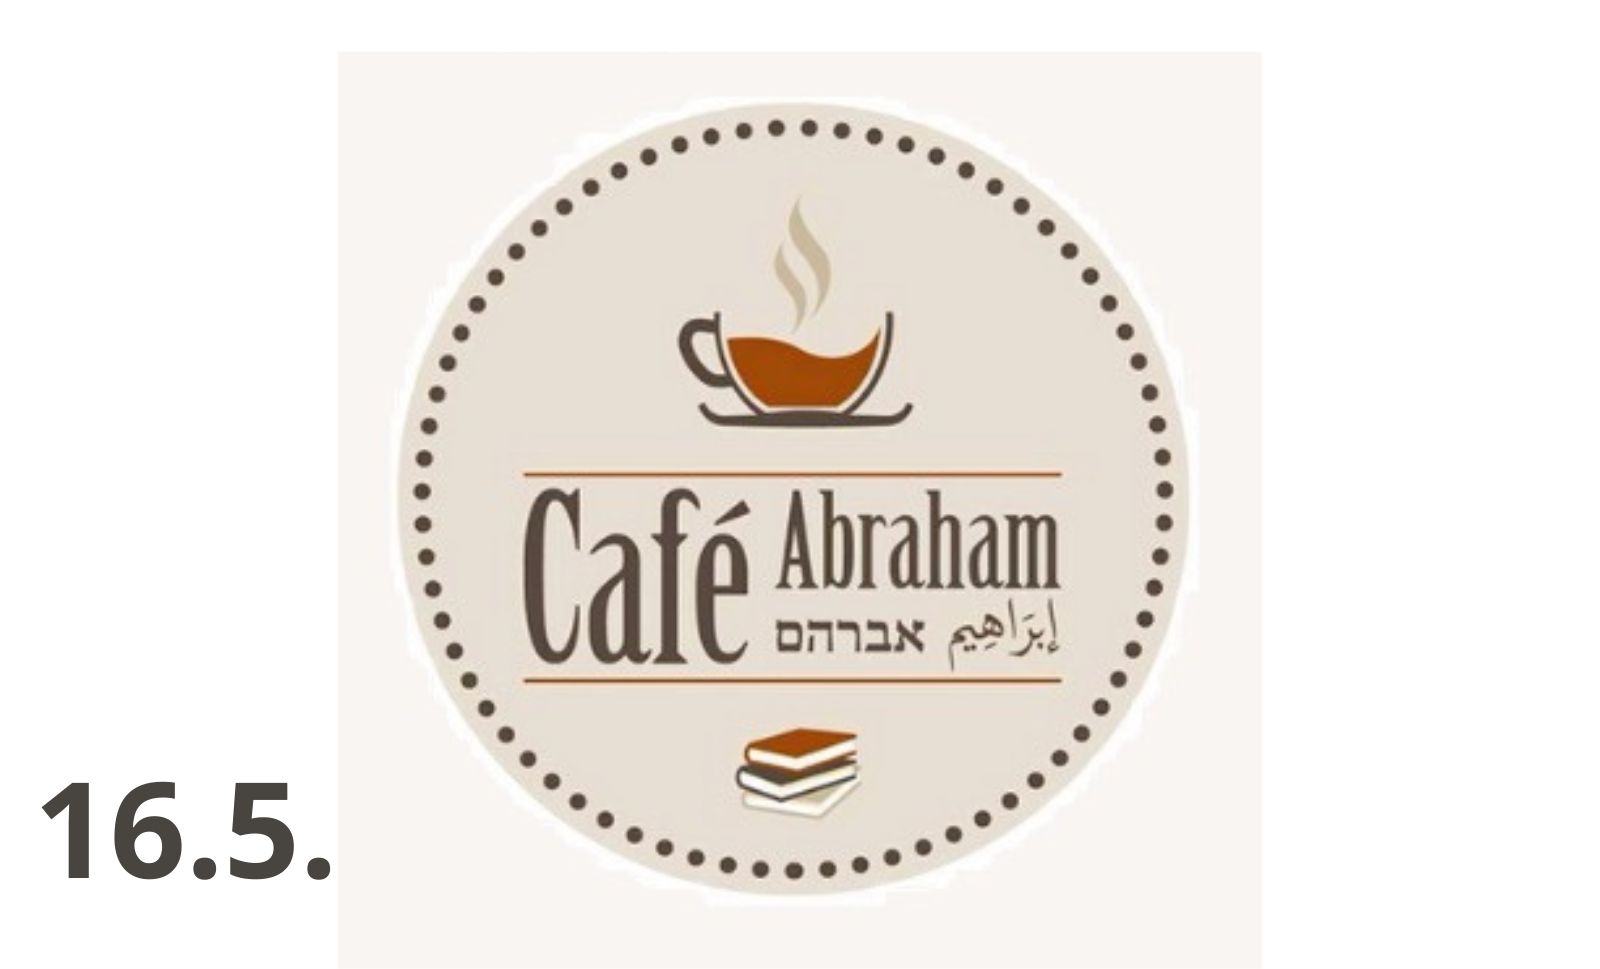 Cafe Abraham richtig